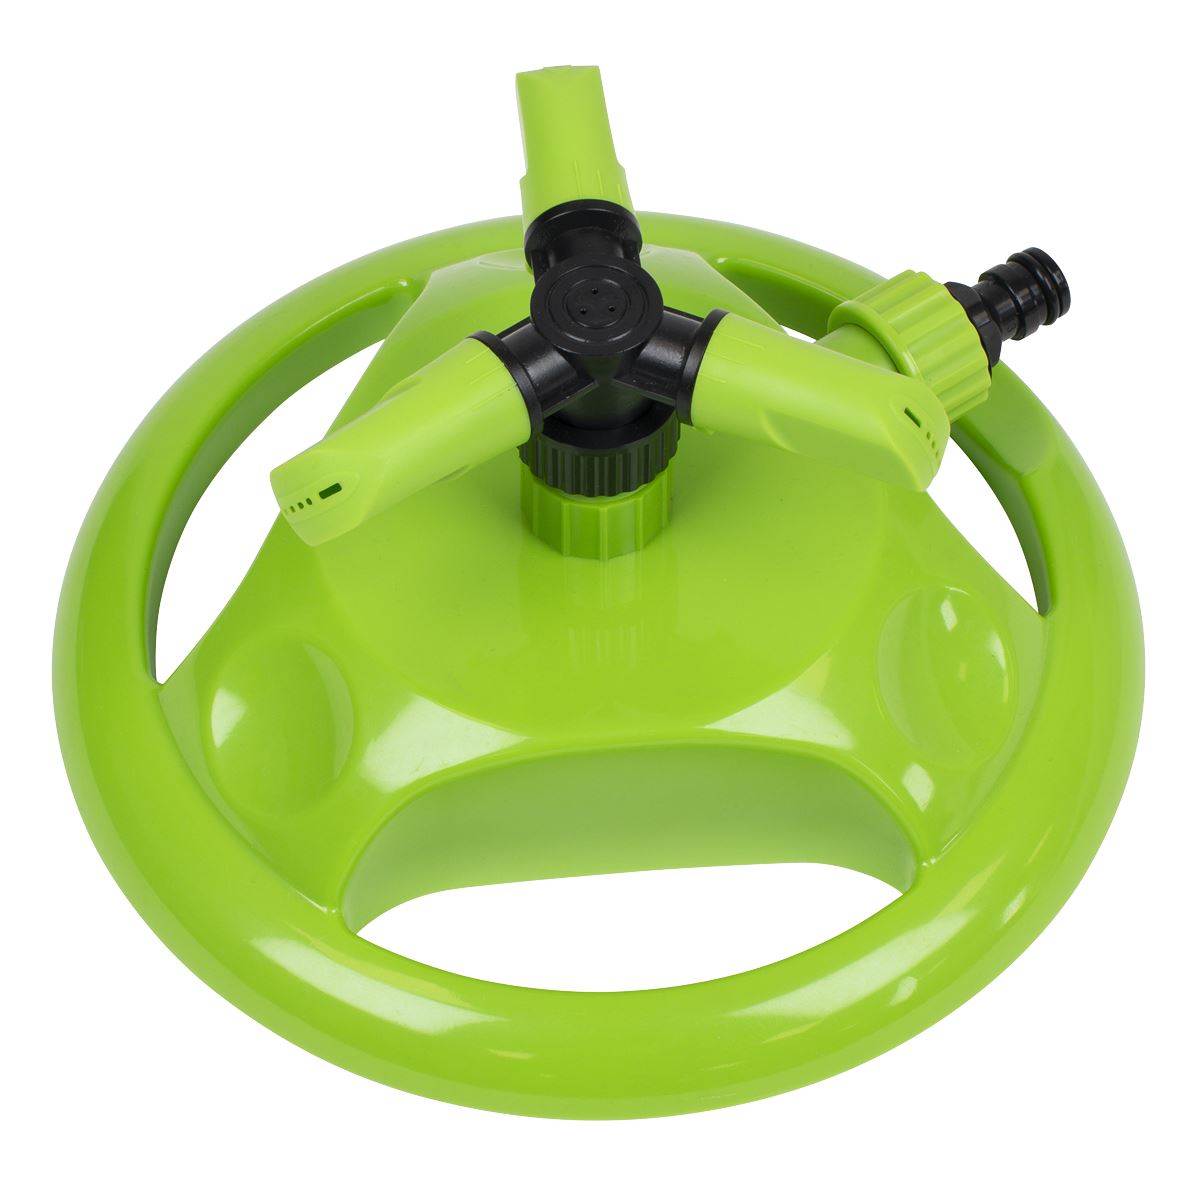 Sealey Adjustable Rotating Garden Sprinkler 3-Arm